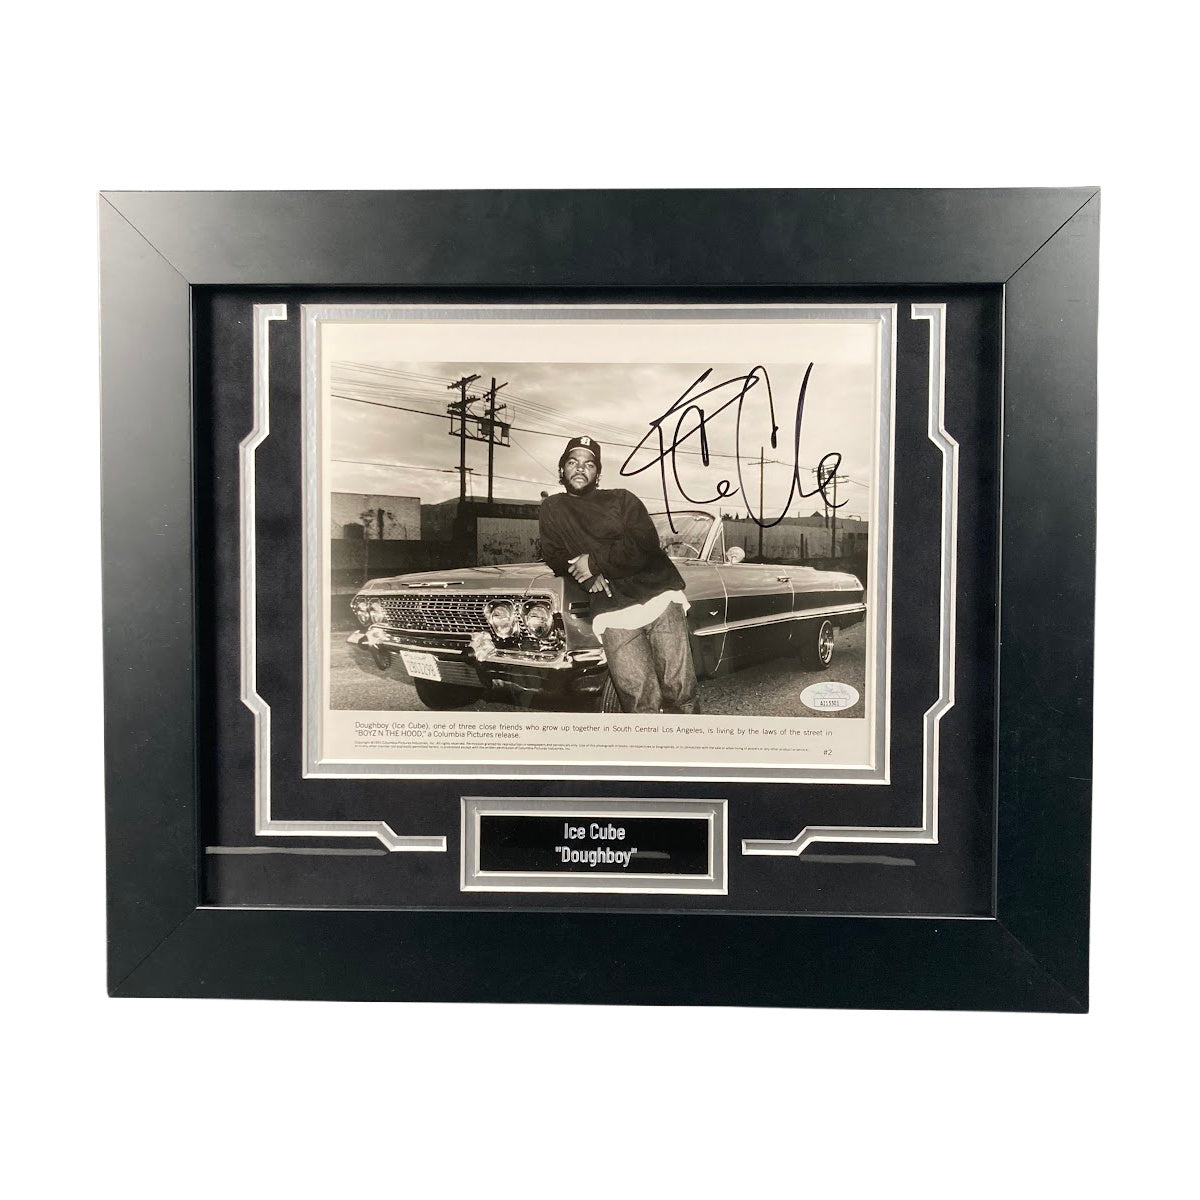 Ice Cube Signed 8x10 Photo B&W Authentic Autographed Framed JSA COA